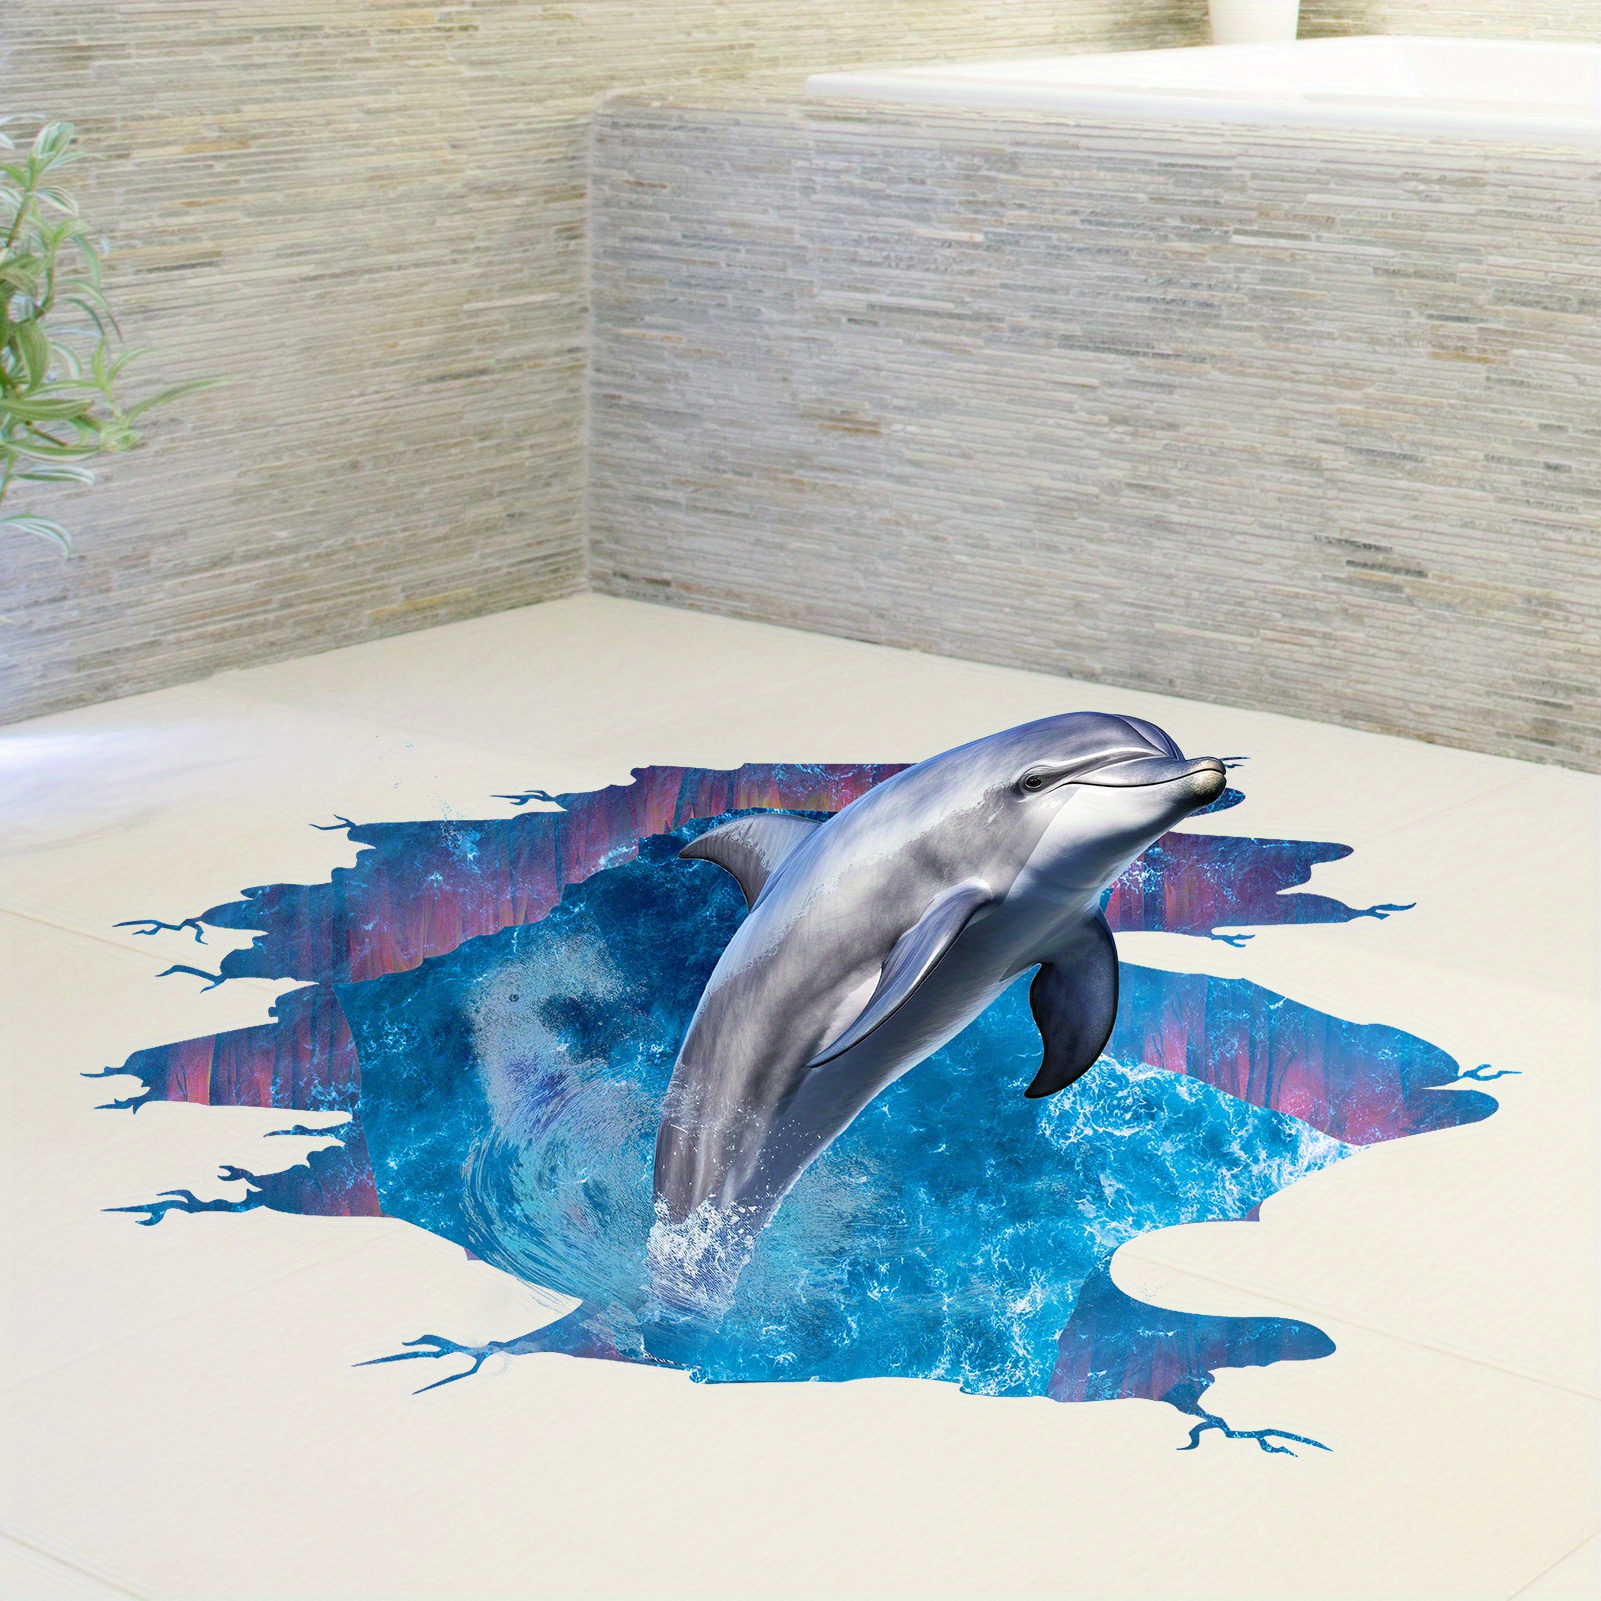 

Vinyl Dolphin Wall Decal, 3d Ocean Floor Stickers, Waterproof Removable Seascape For Bathroom Bedroom Living Room Decor